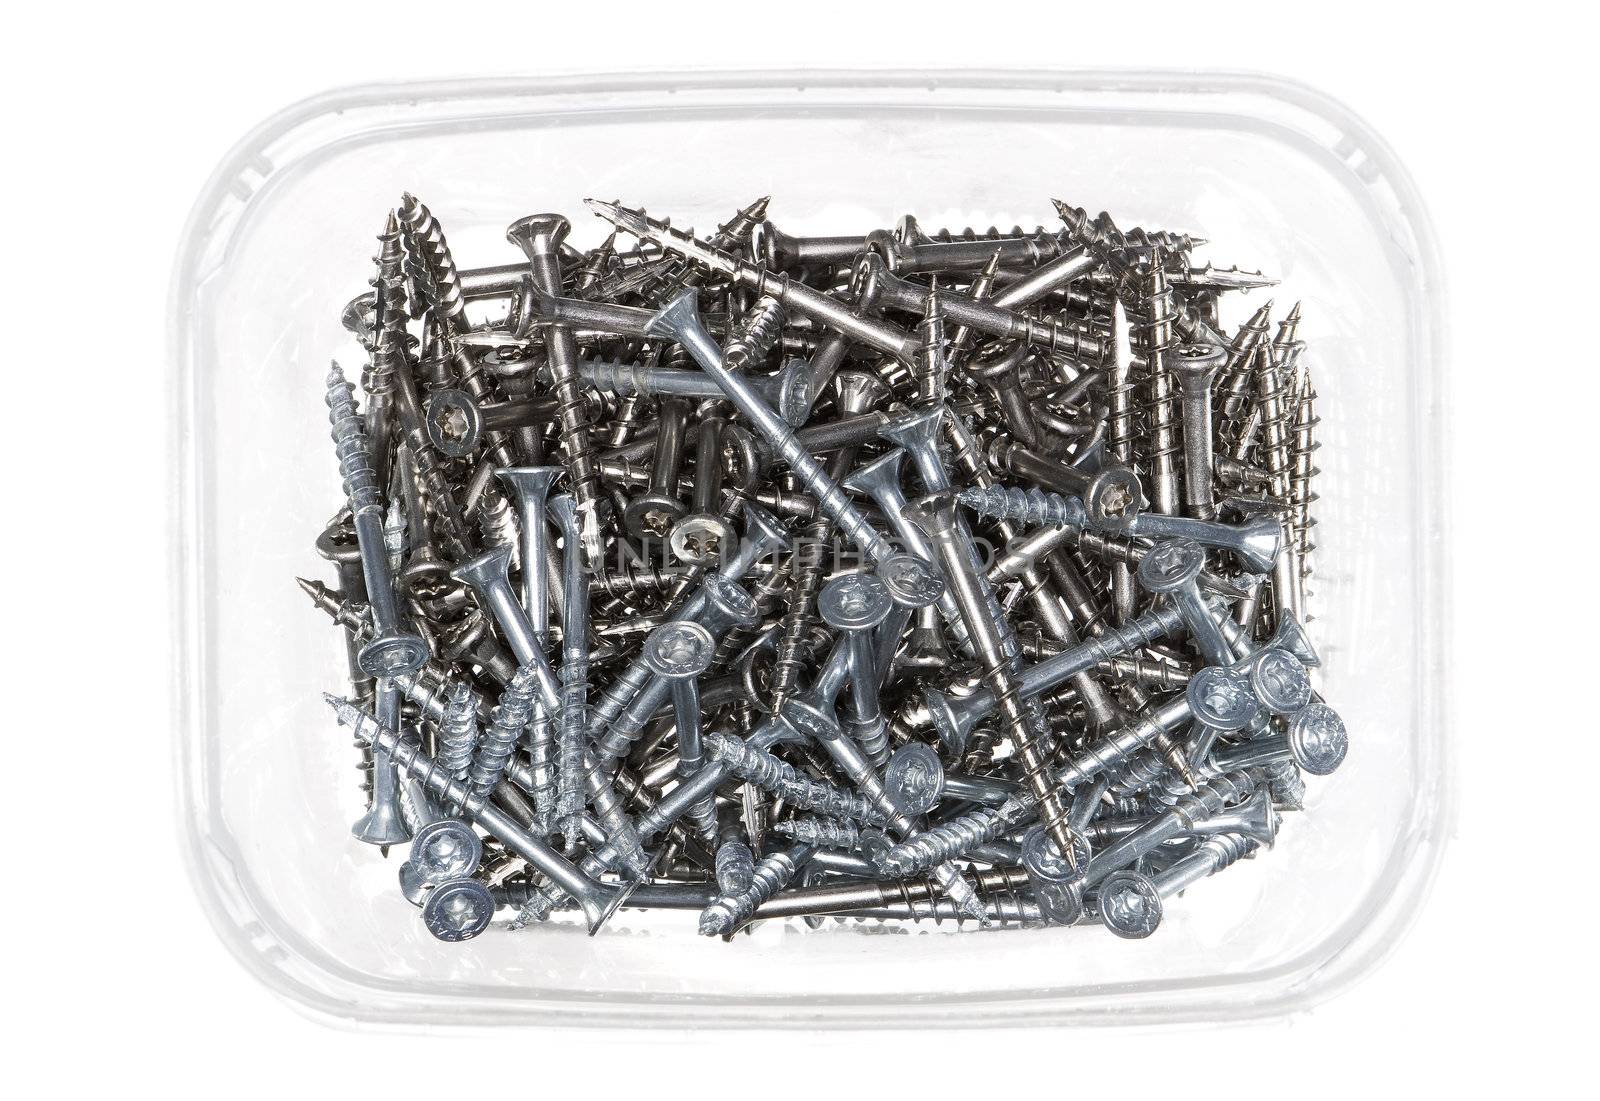 A box of screws by gemenacom